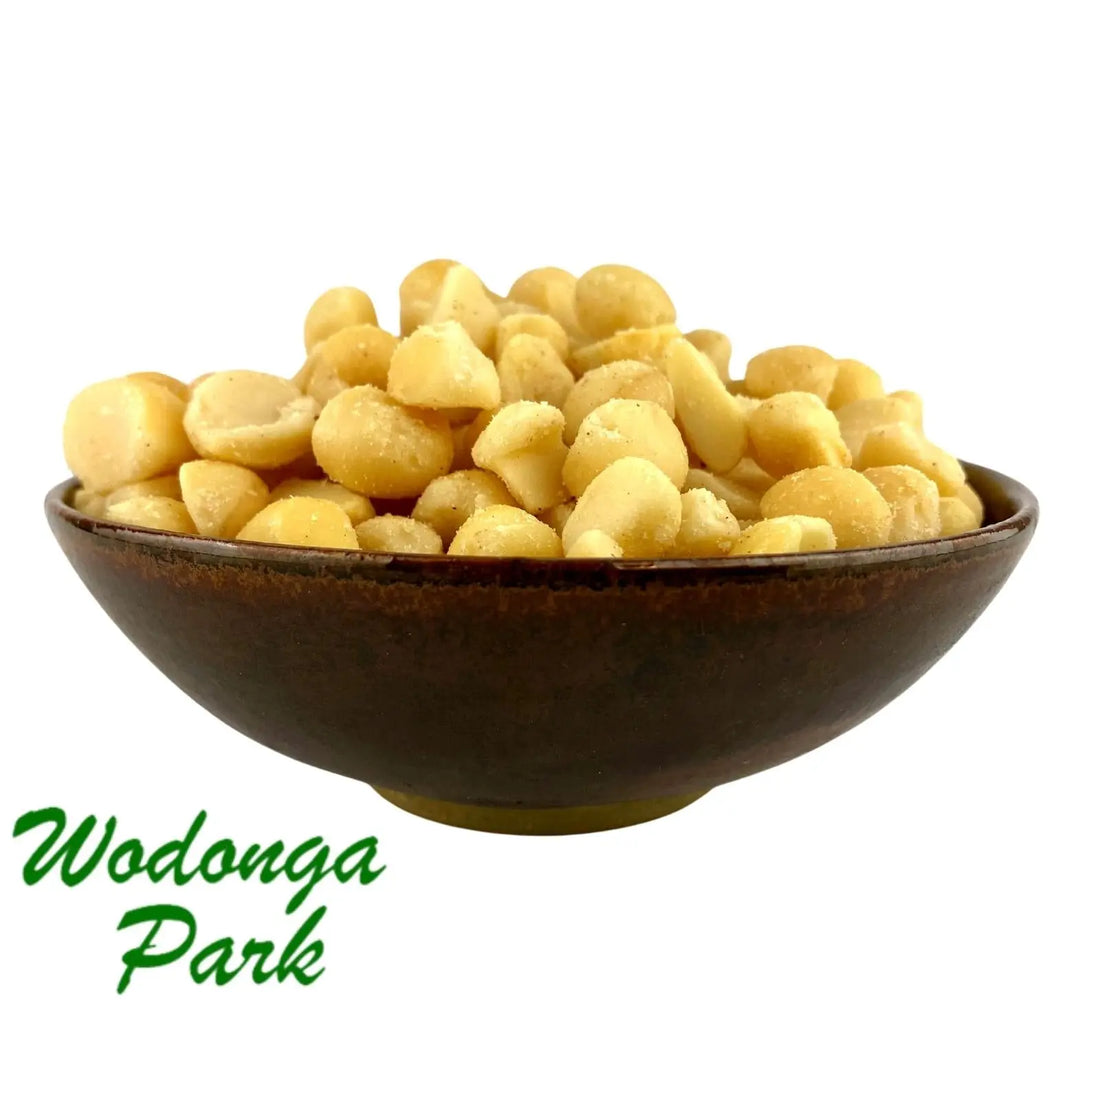 Macadamia Raw Biodynamic 300g-Nuts & Seeds-Wodonga Park Fruit and Nuts-Sovereign Foods-Organic-Biodynamic-Australian Grown Macadamias-Nuts